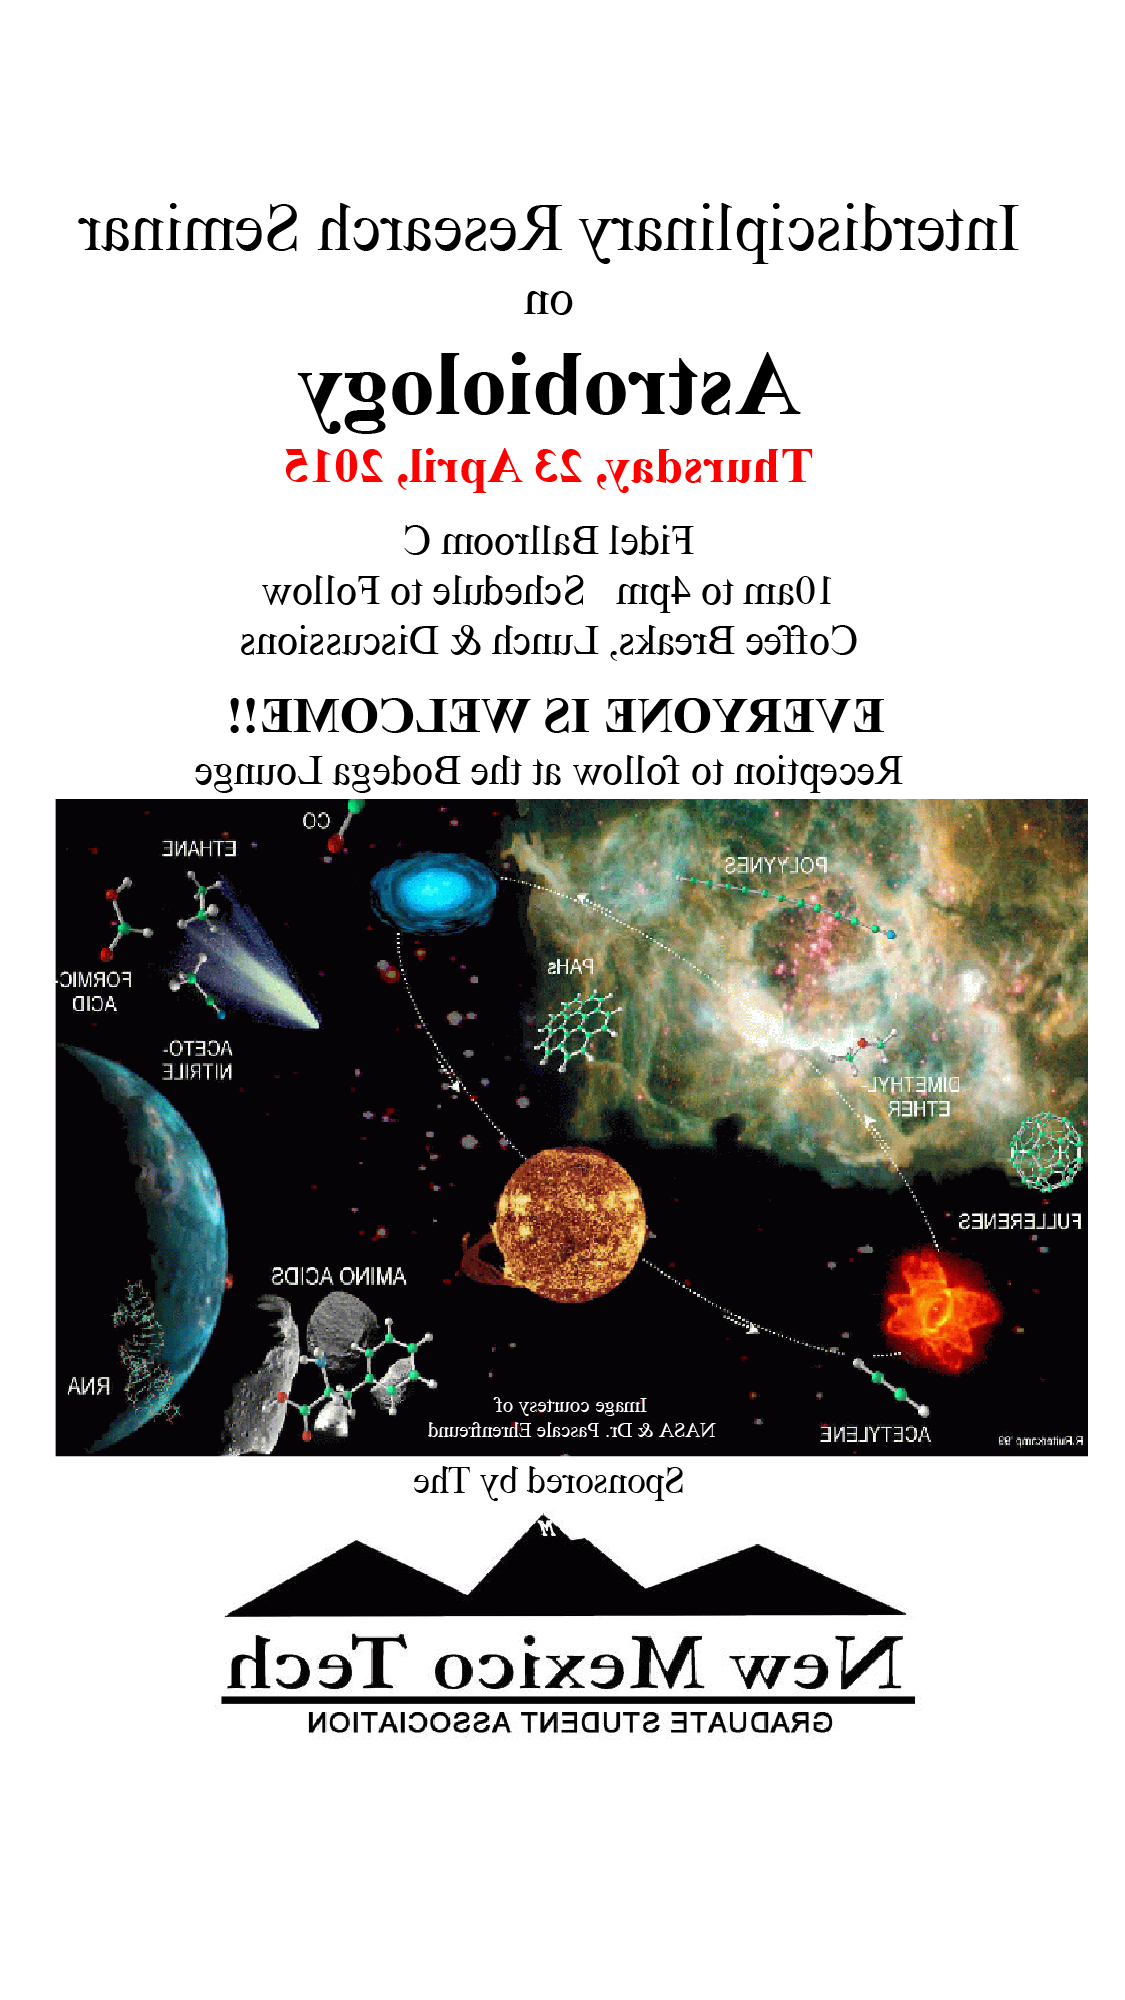 2015 Symposium Flyer